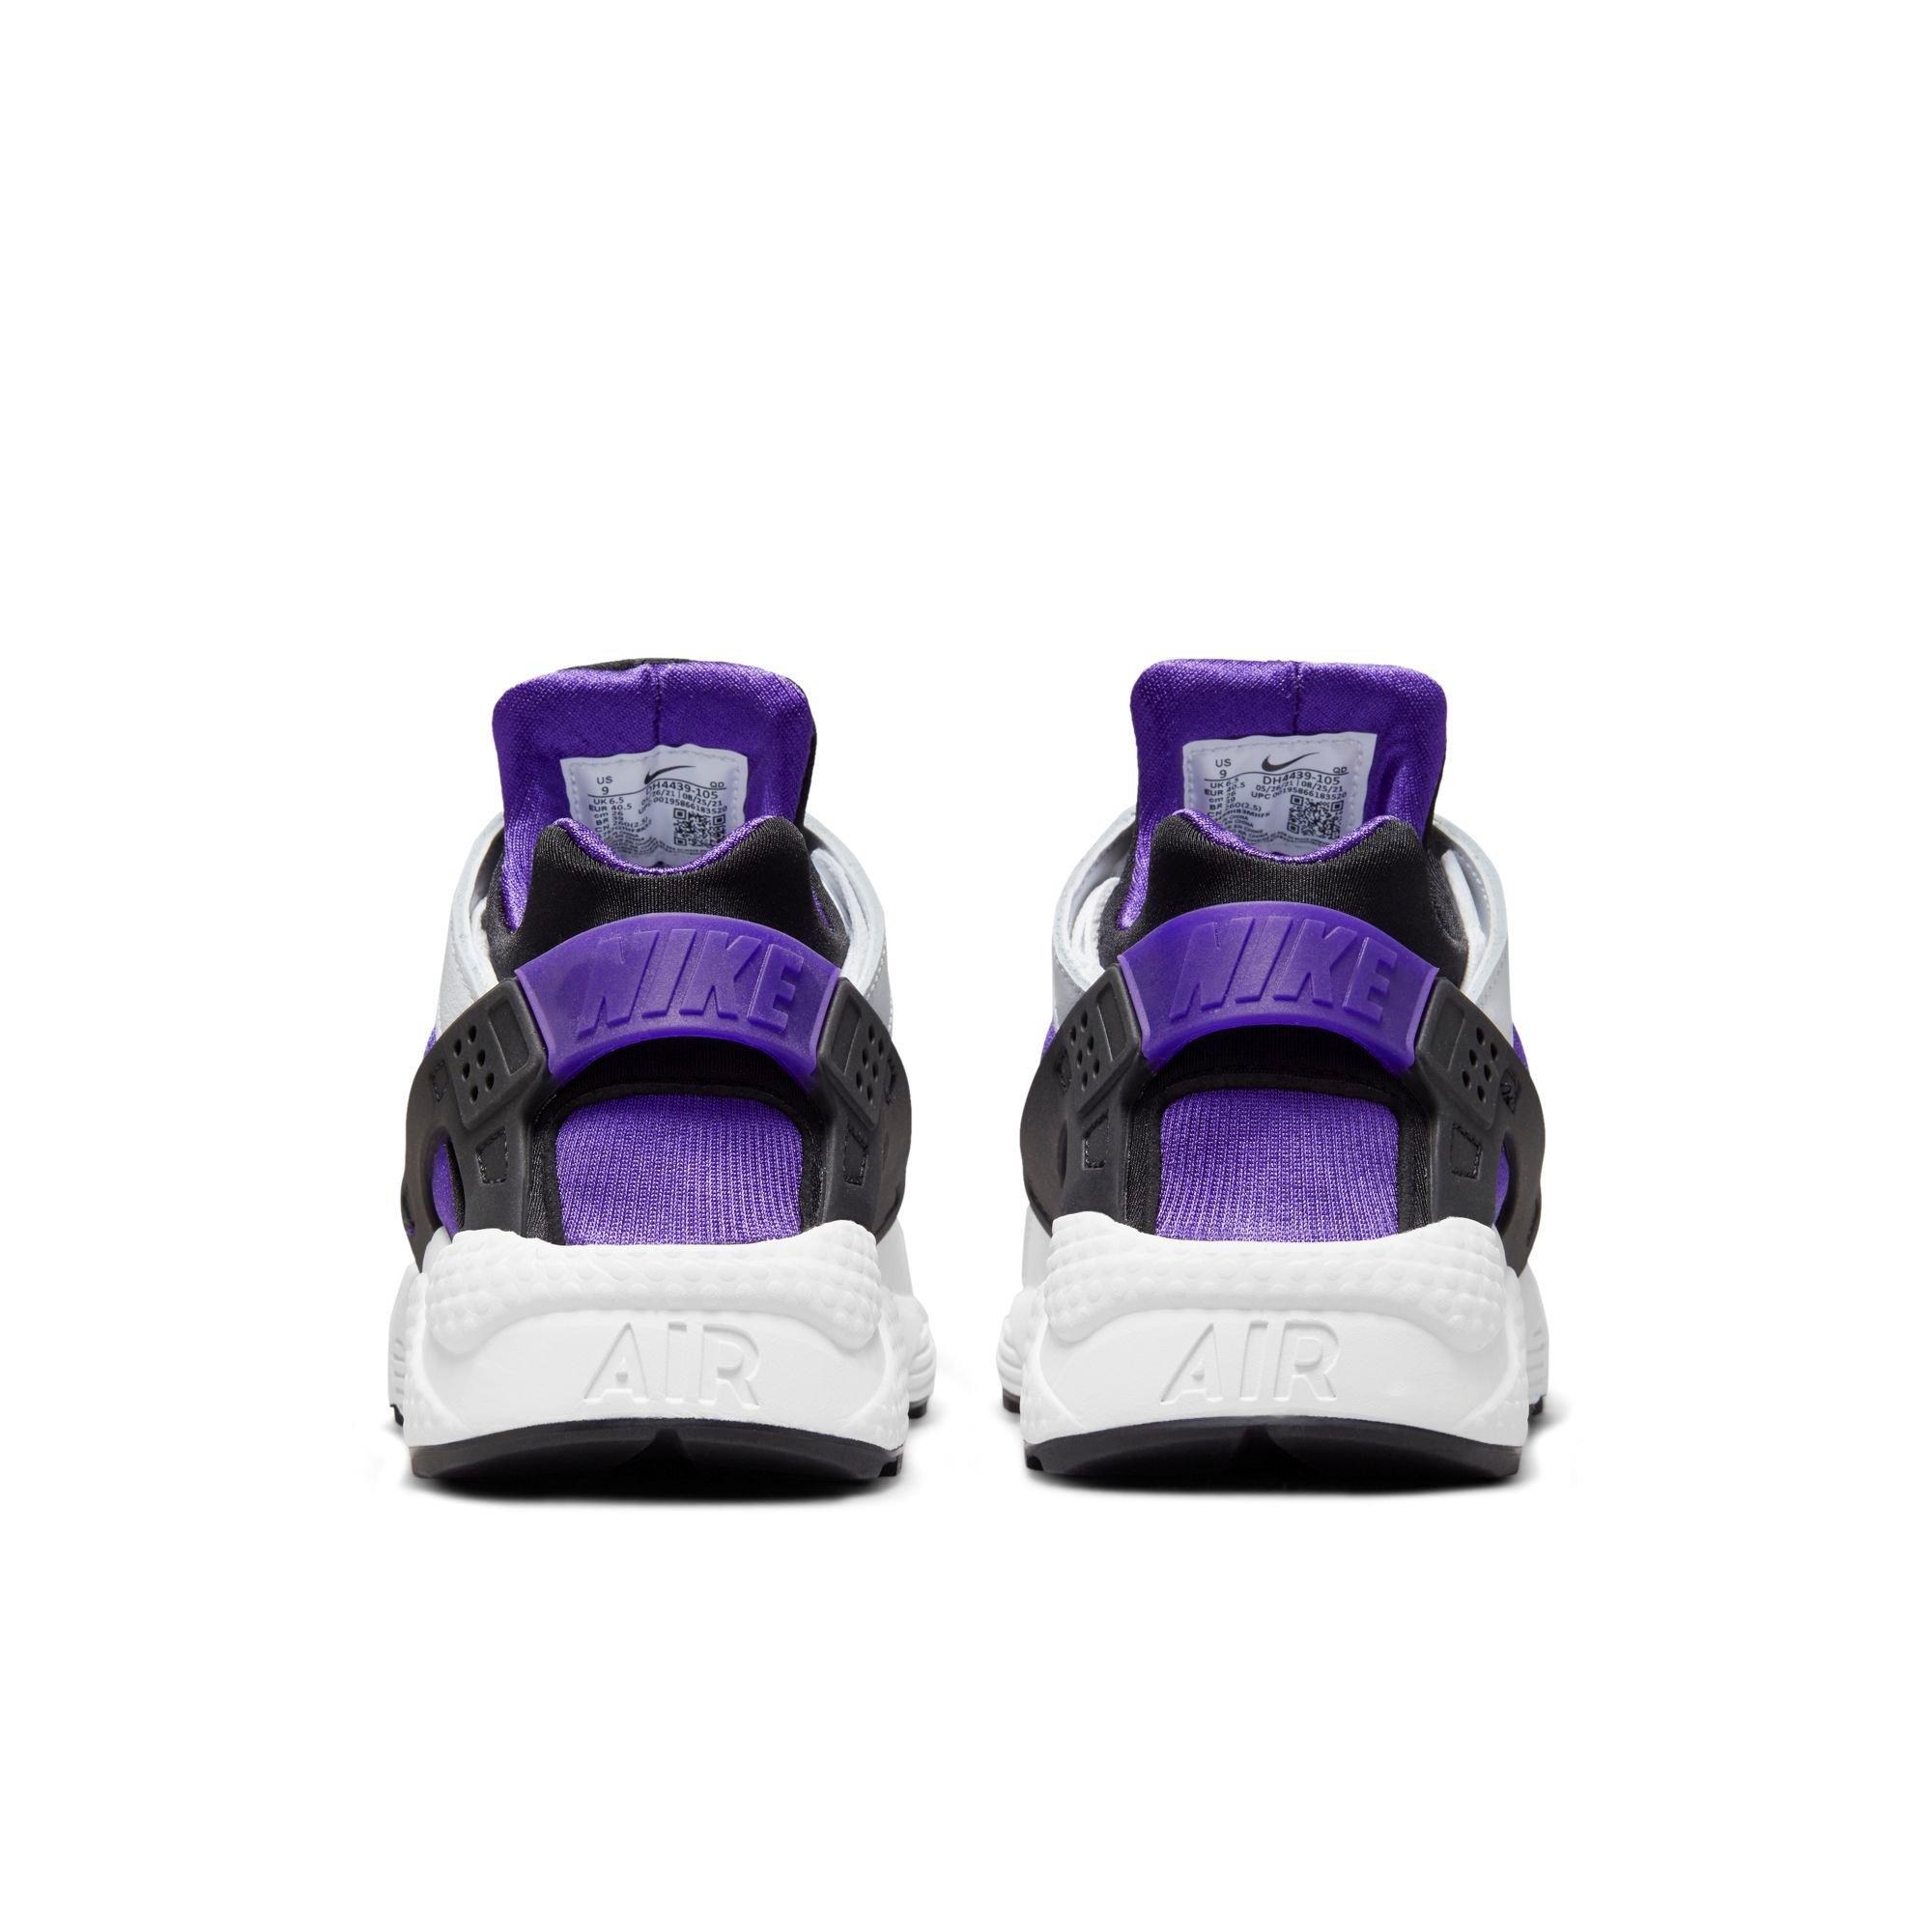 Nike Air "White/Black/Electro Purple" Women's Shoe